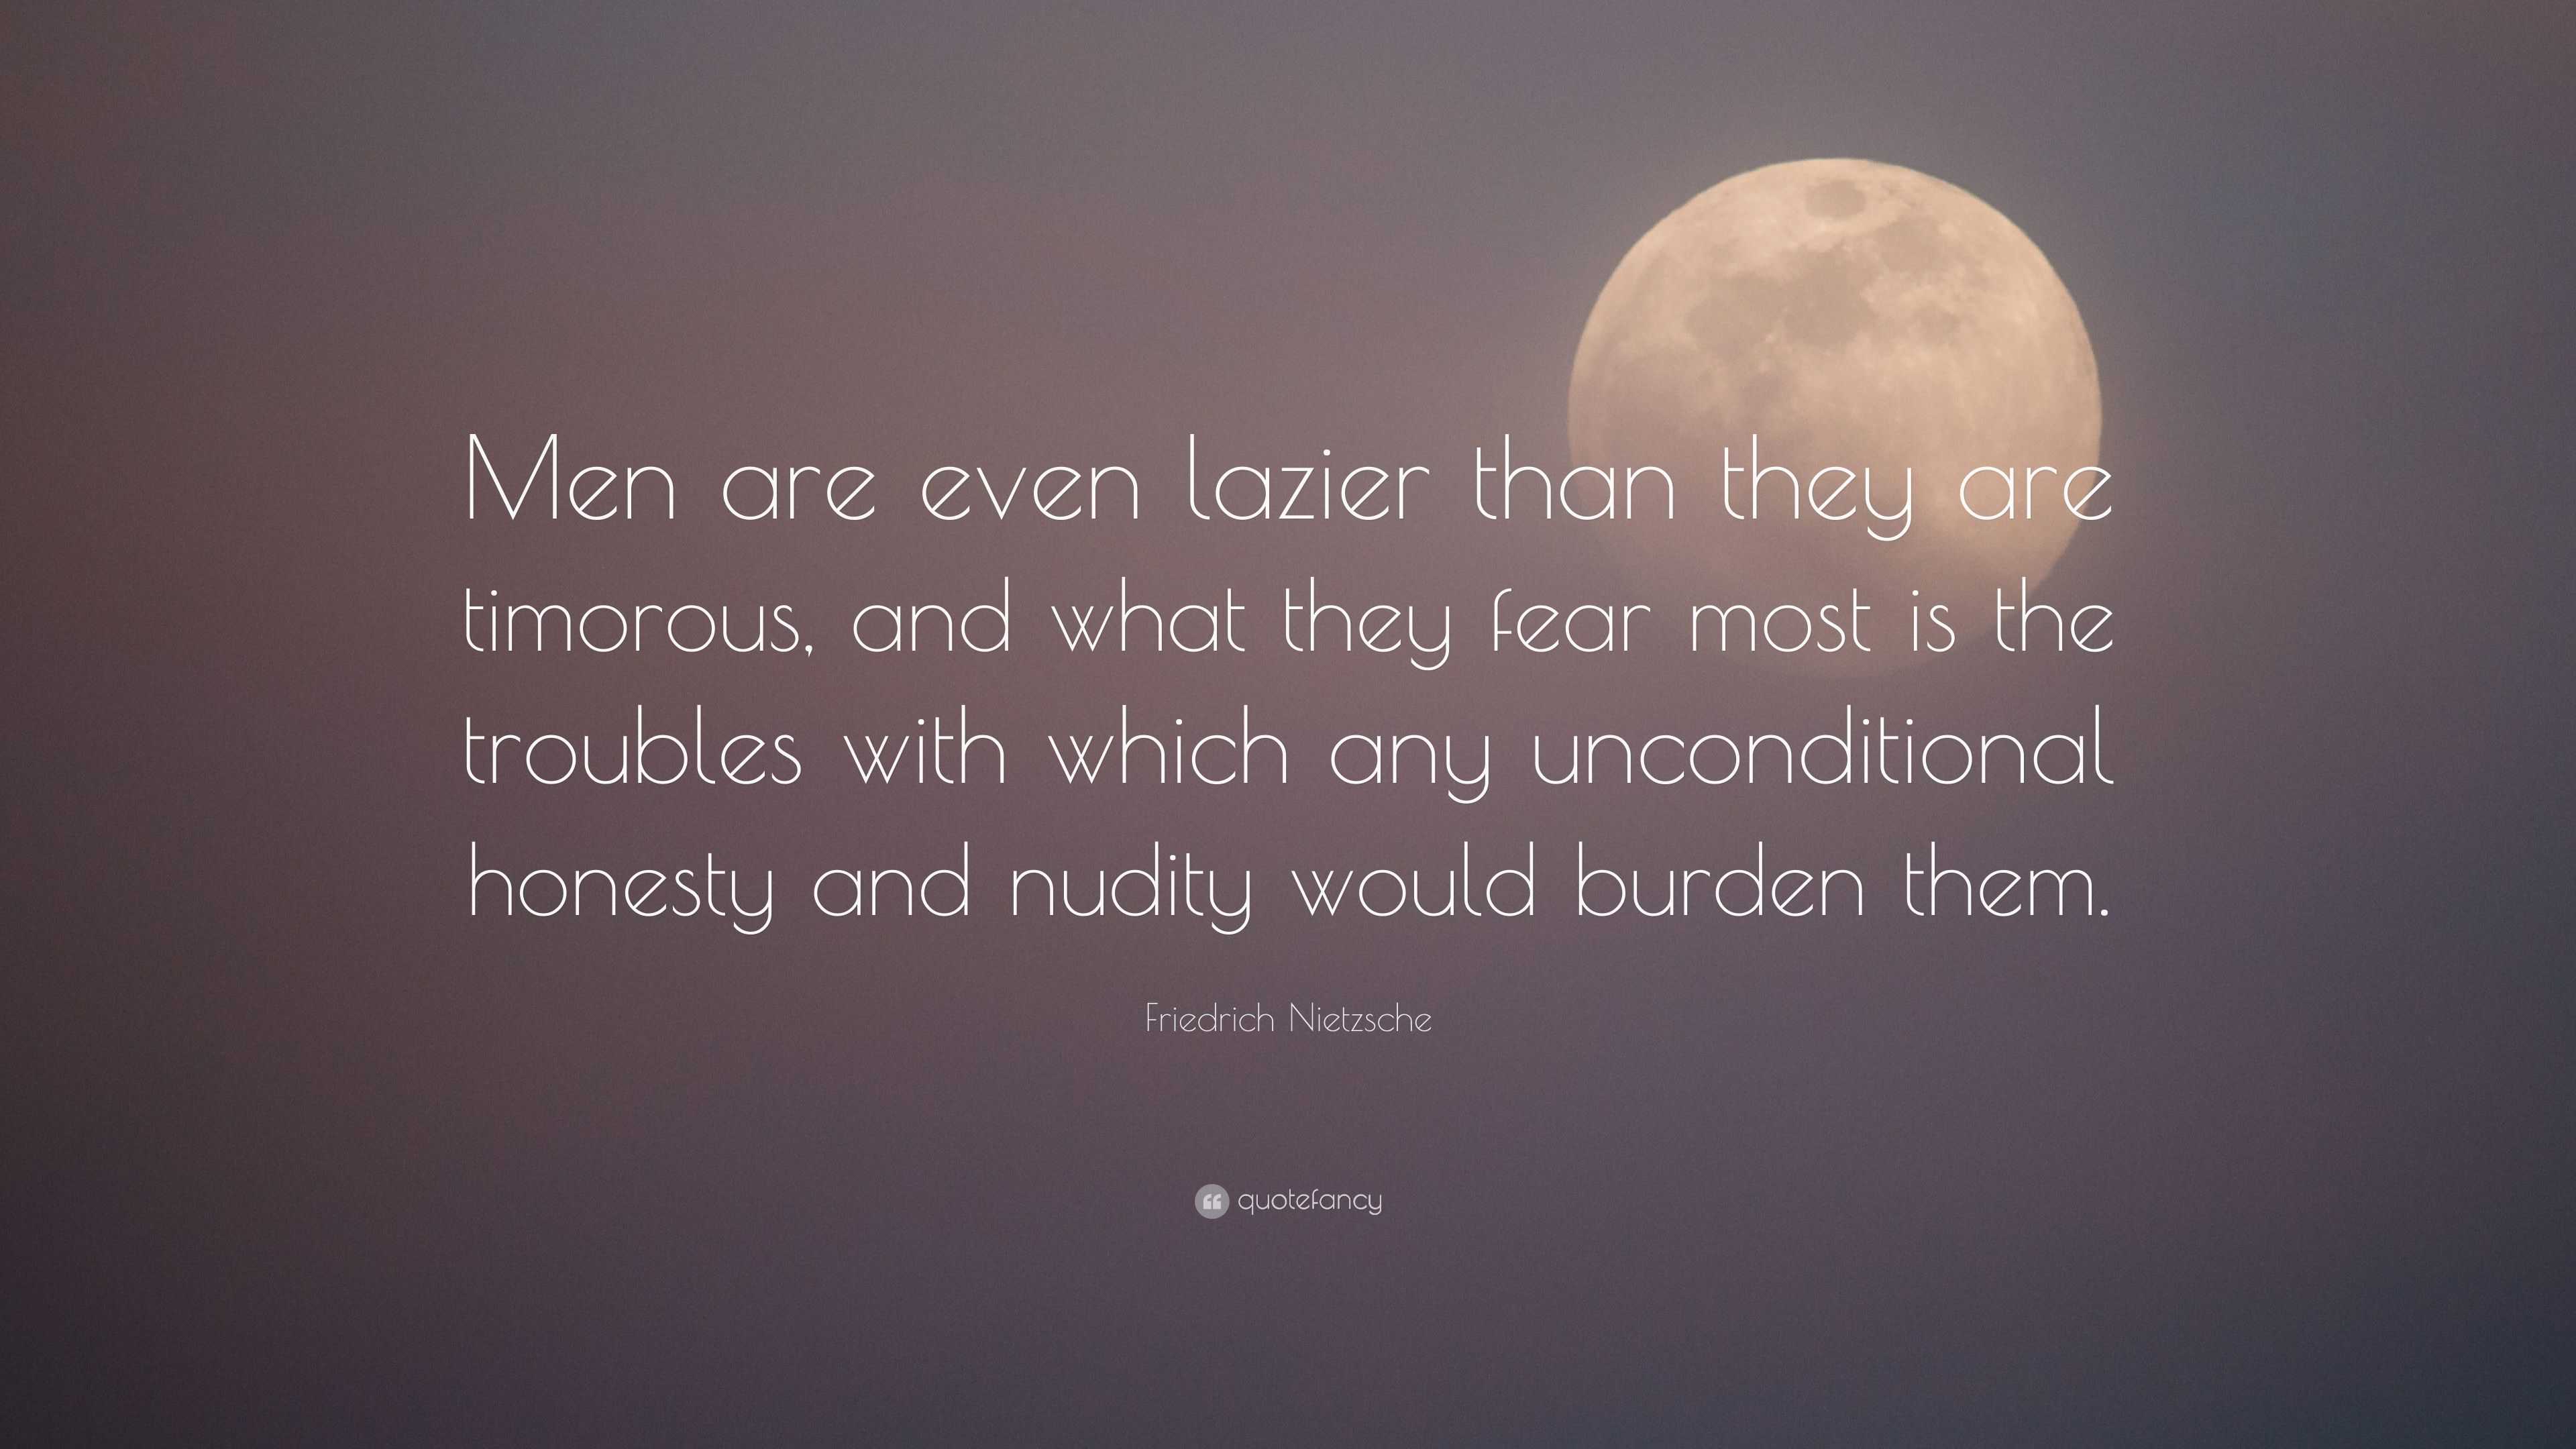 Friedrich Nietzsche Quote: “Men are even lazier than they are timorous ...